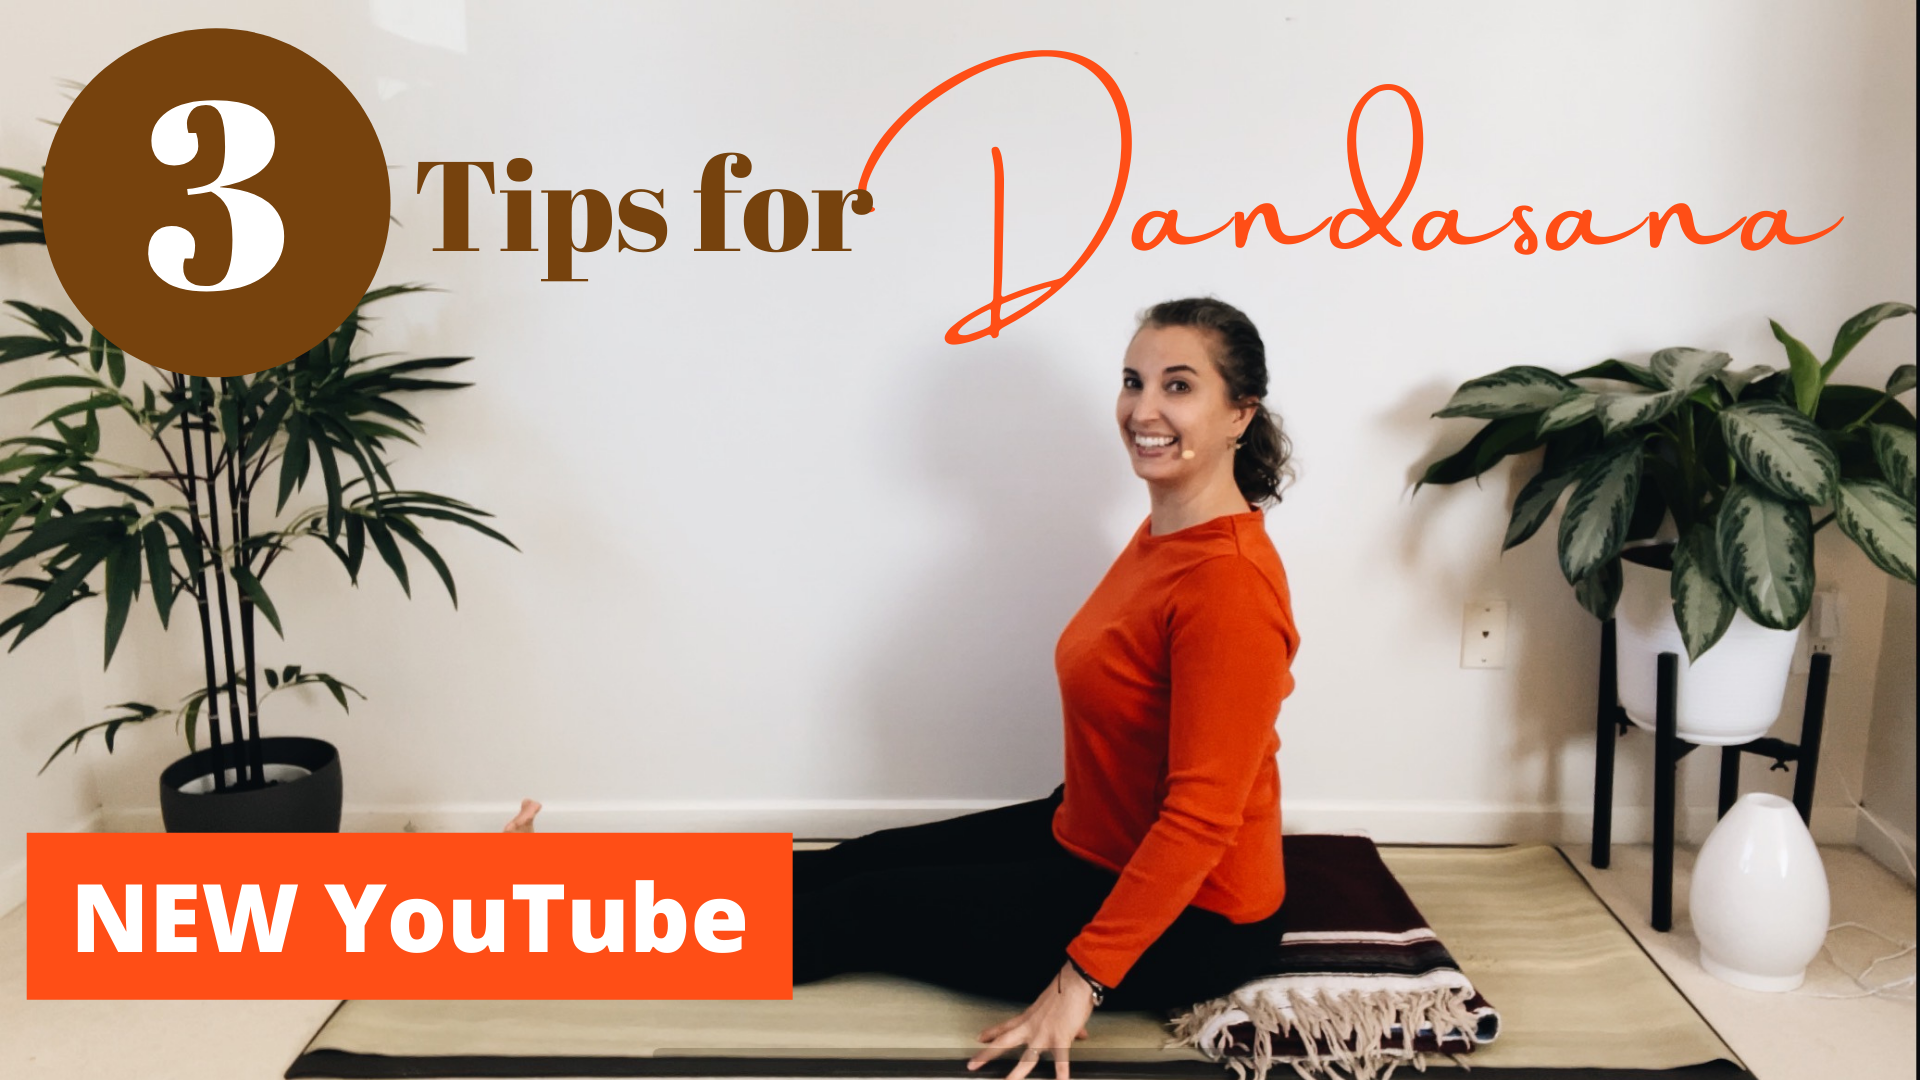 YouTube: 3 Tips for Aligning Dandasana | Yoga with Laura